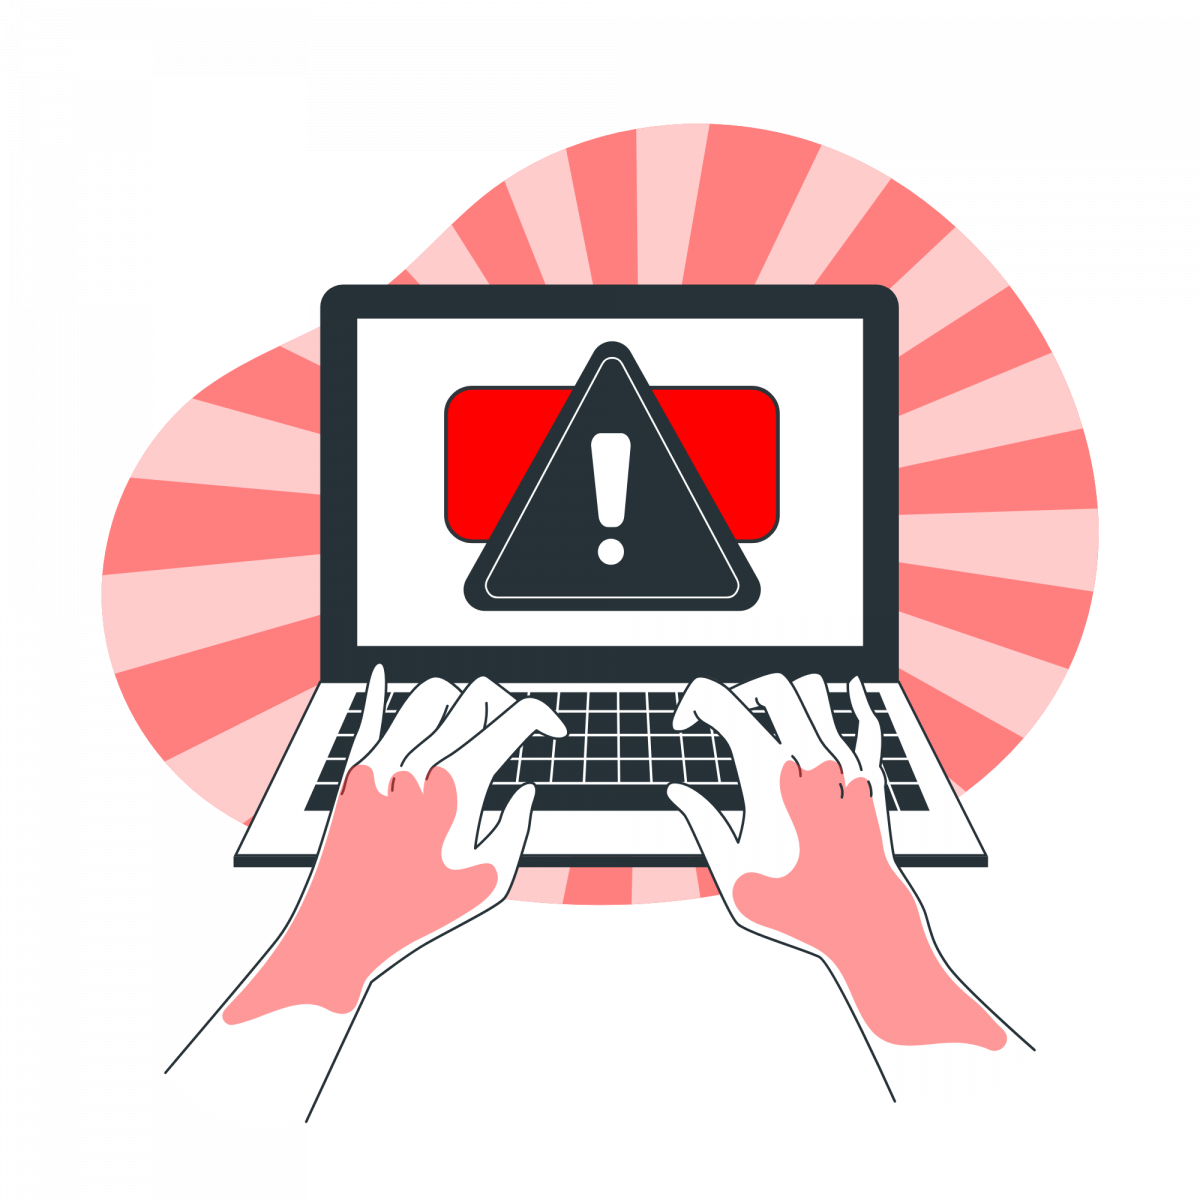 ALERT: TLS/SSL certificates - Phishing vigilance